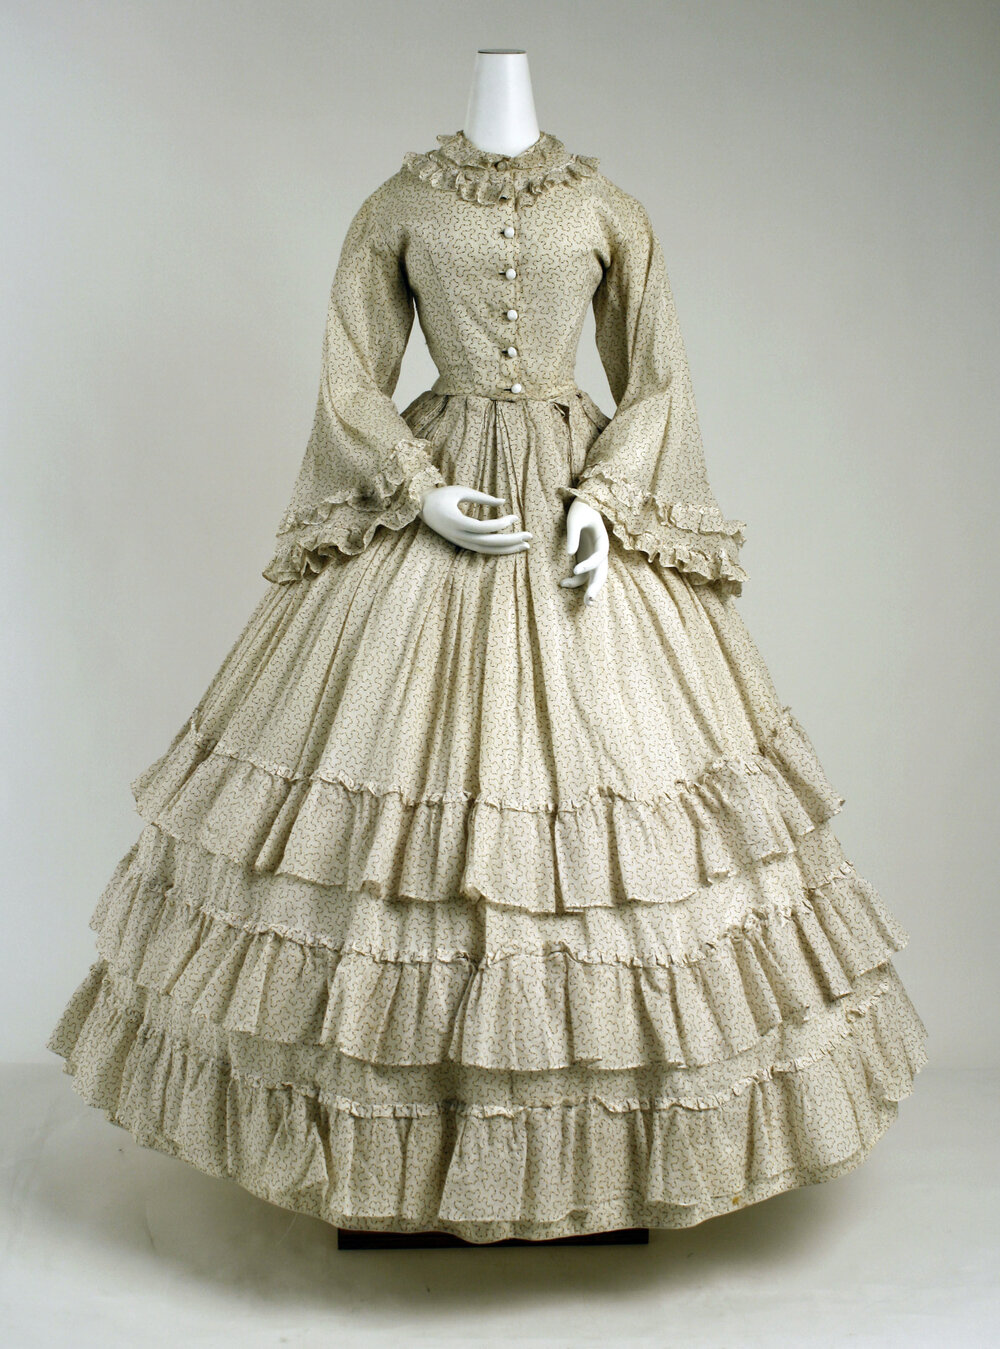 Dress, c. 1860. European. Metropolitan Museum of Art (source).